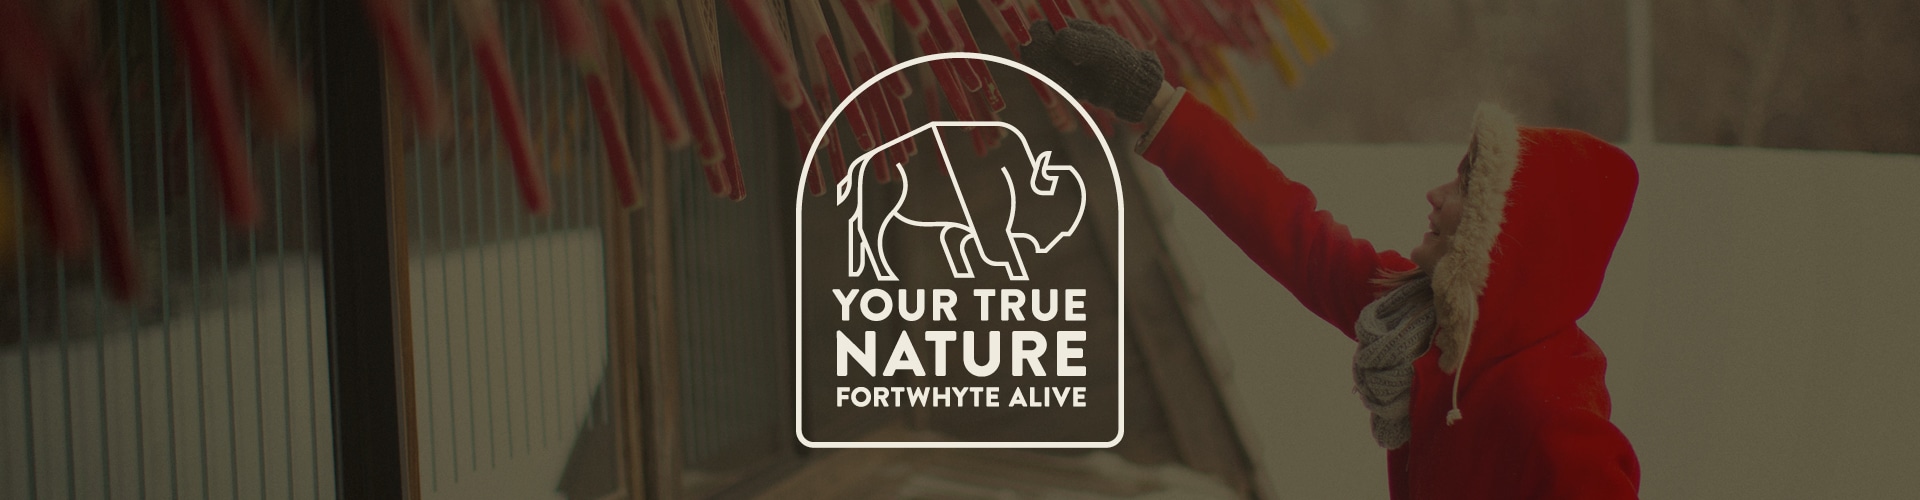 Your True Nature banner featuring Buffalo motif